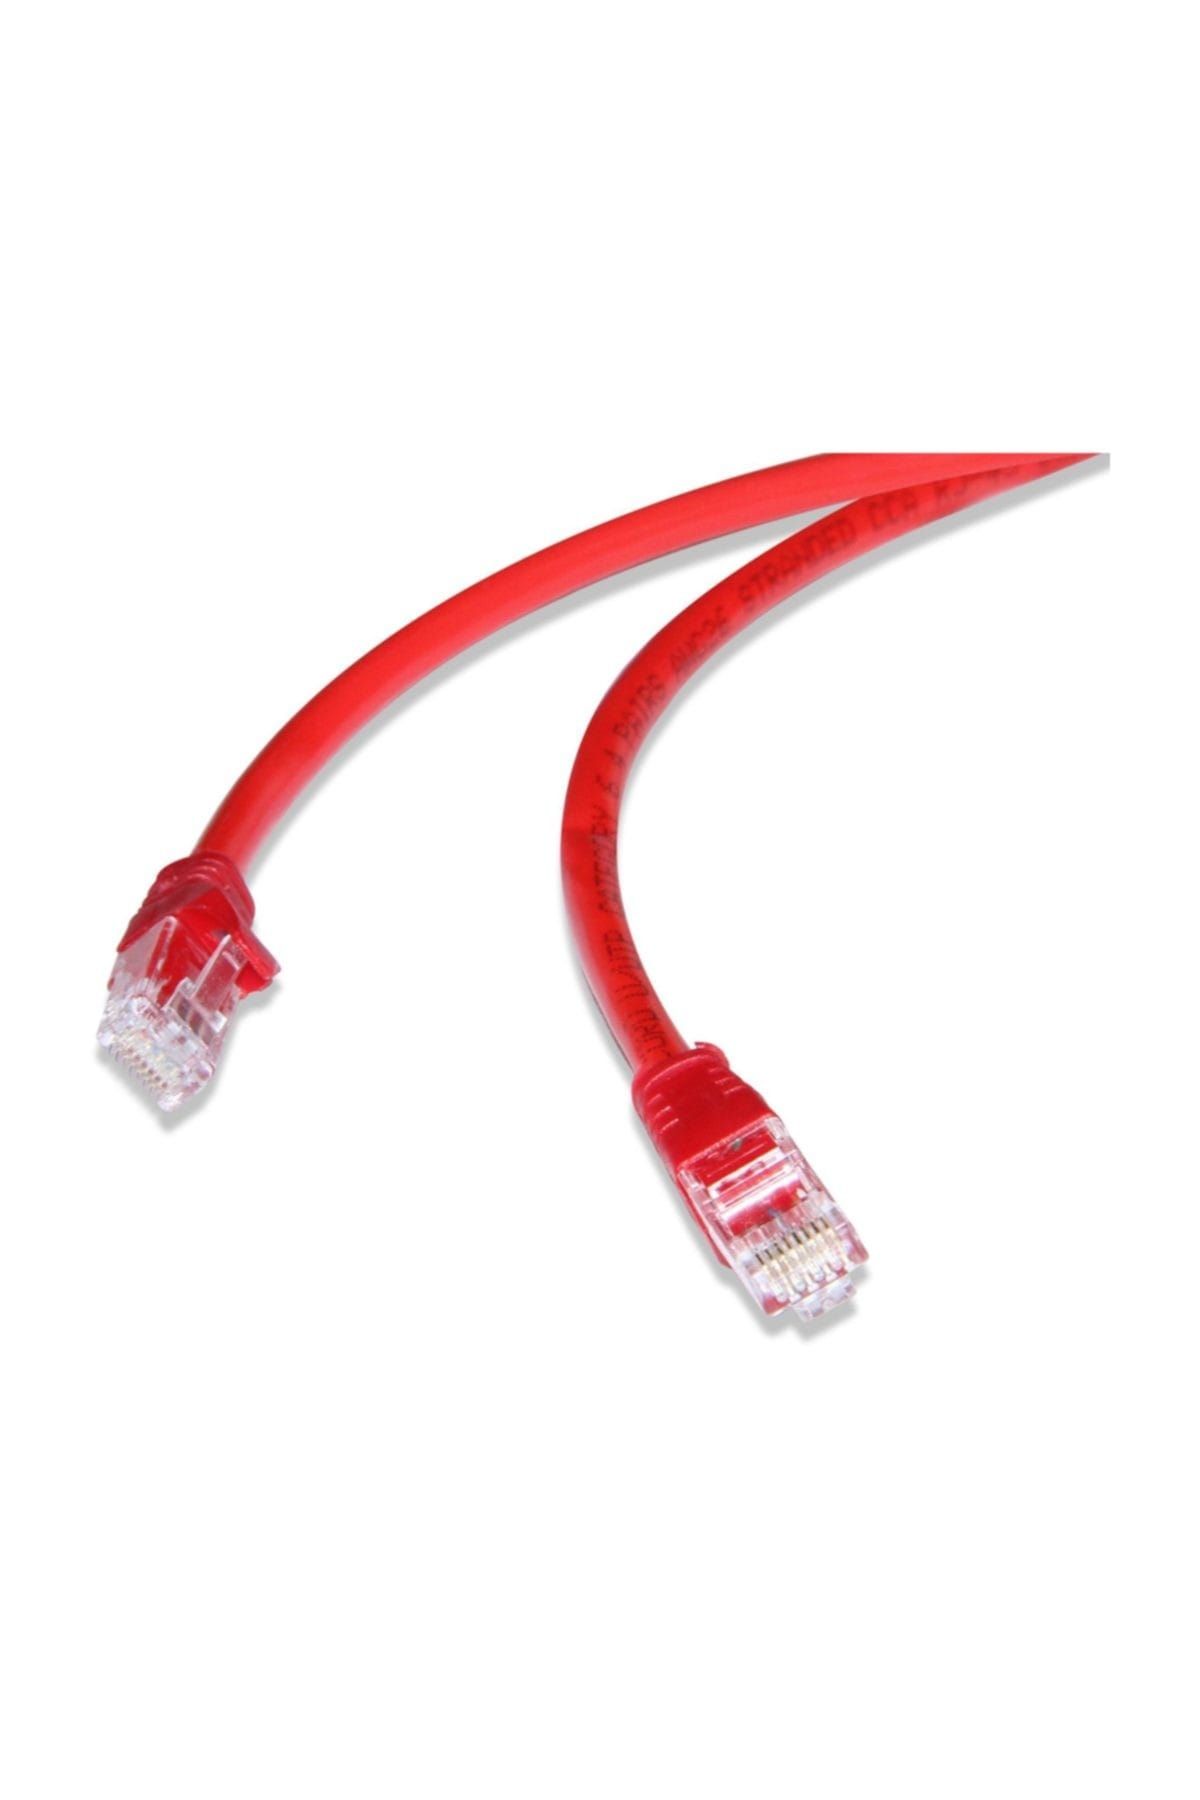 FLAXES 20cm Cat6 (Patch) Network Kablosu Kırmızı FNK-6002K